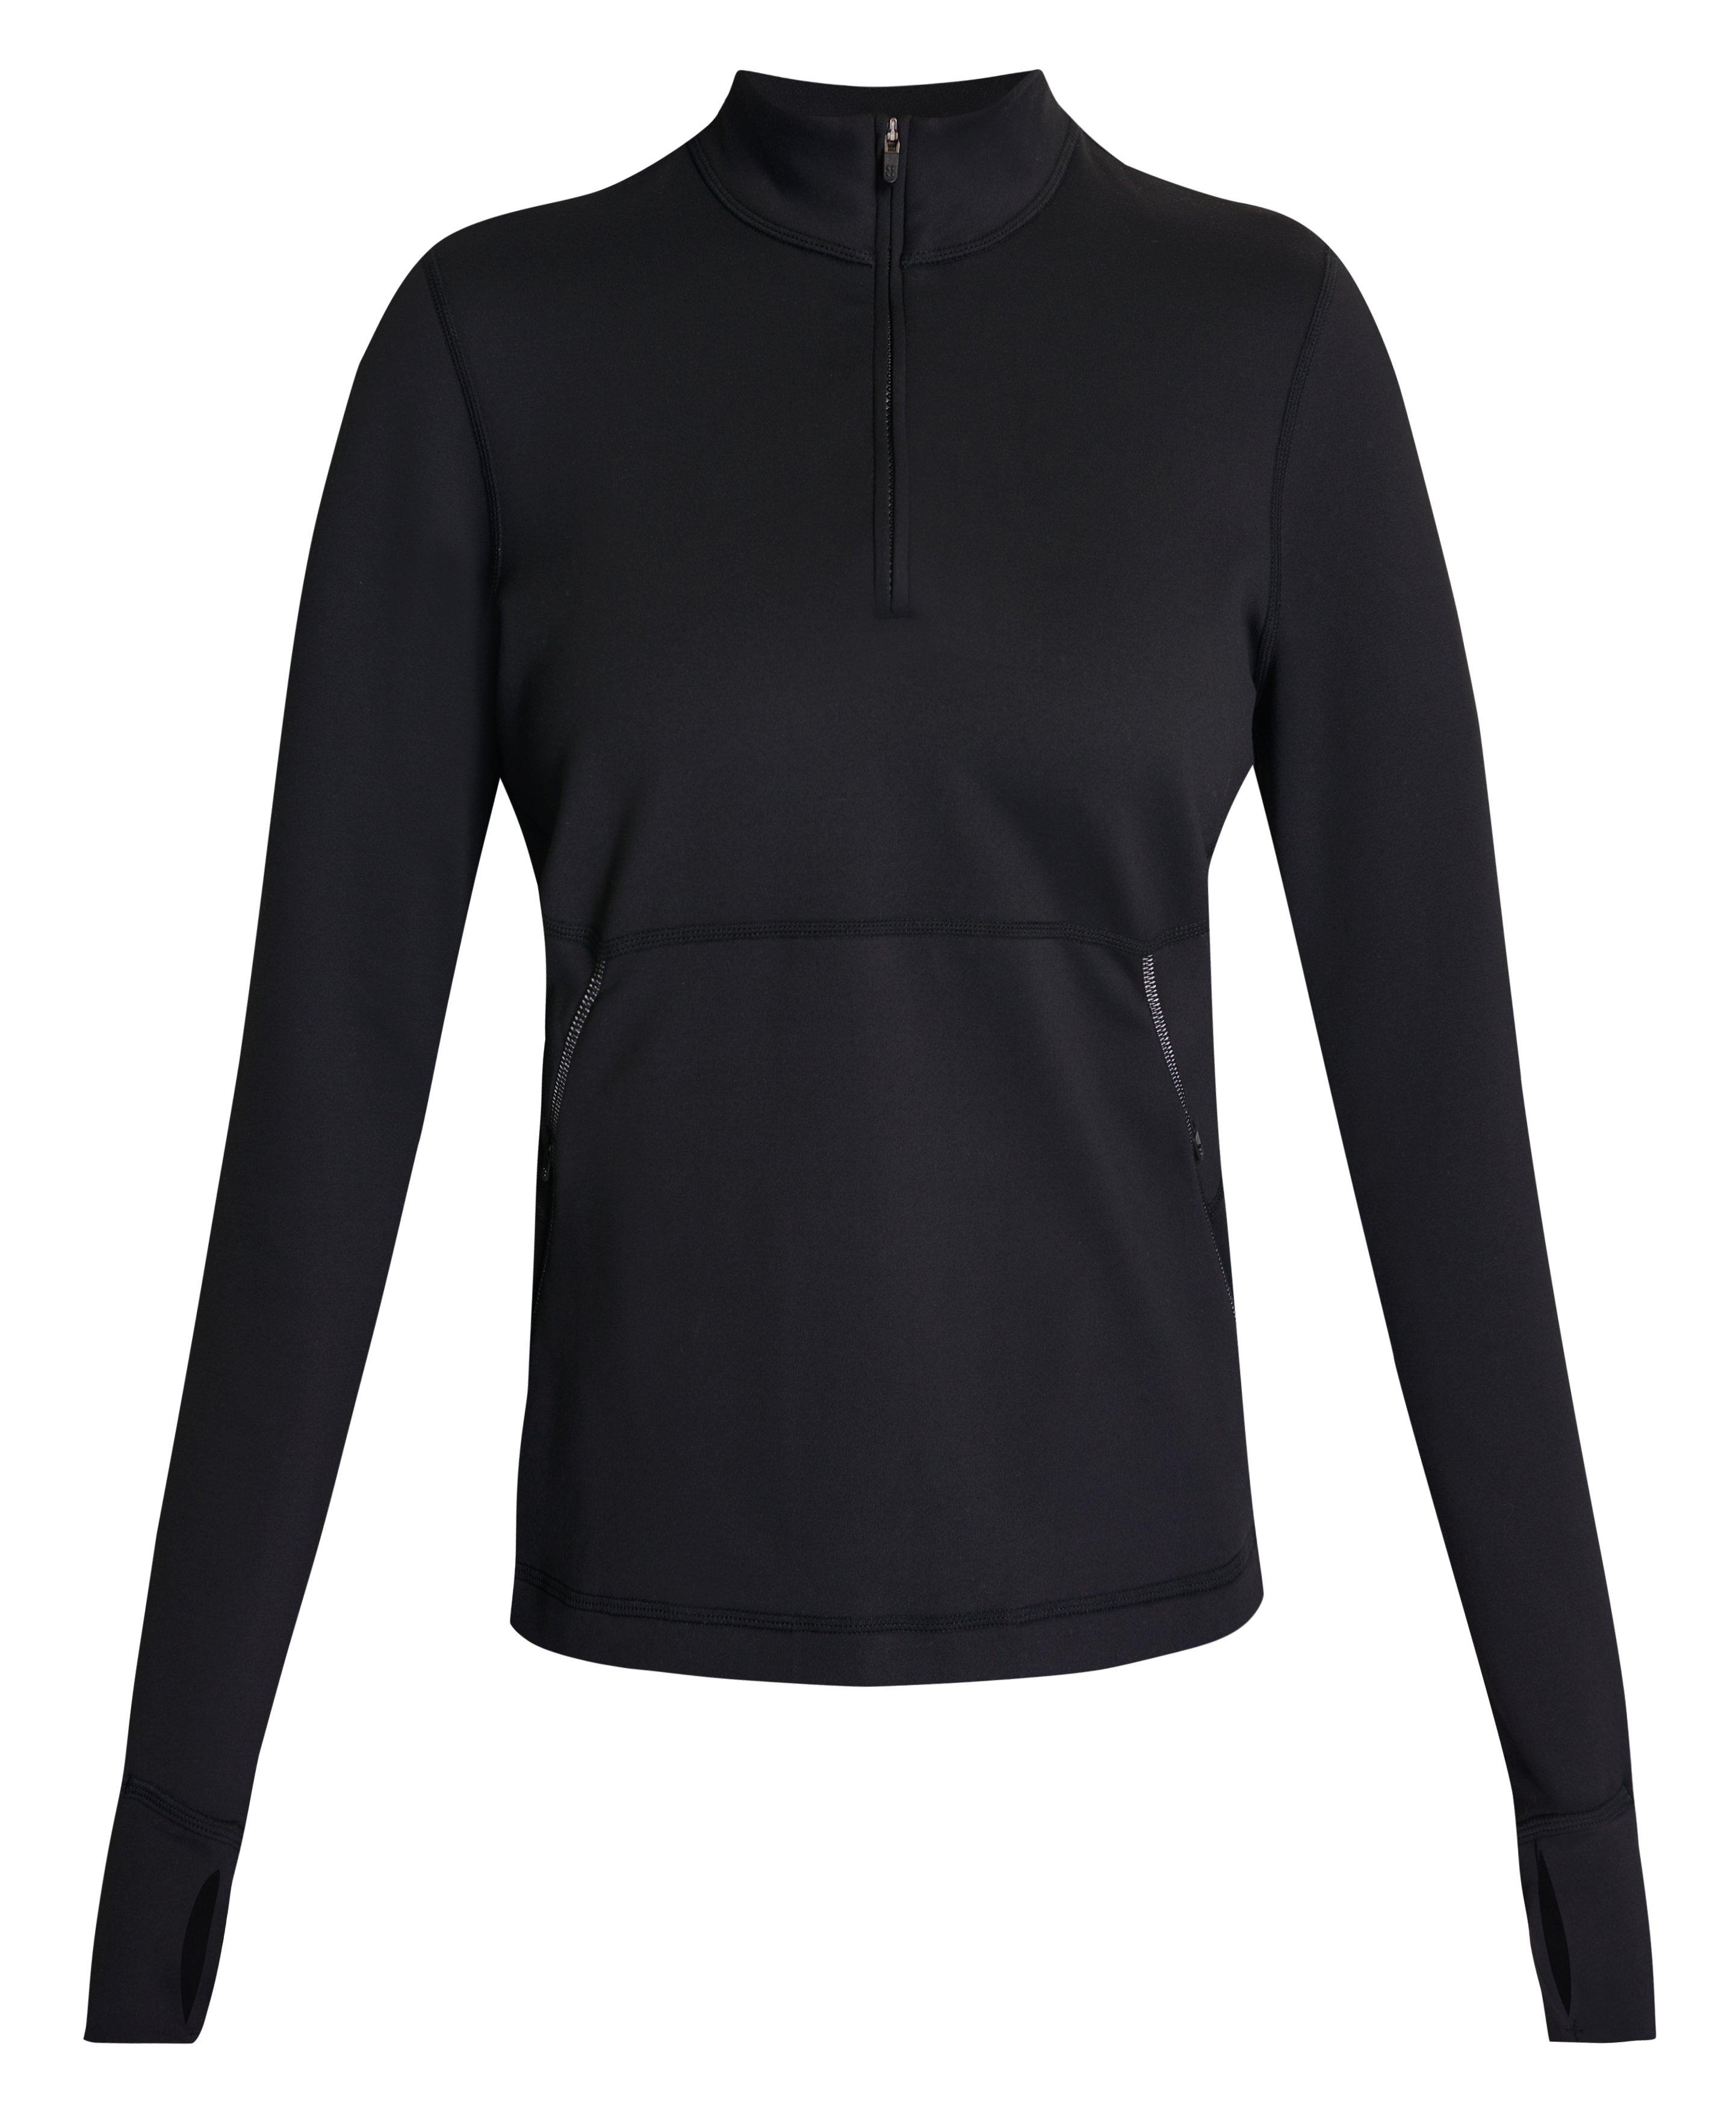 Therma Boost Running Half Zip - Black | Women's Sweaters + Hoodies 